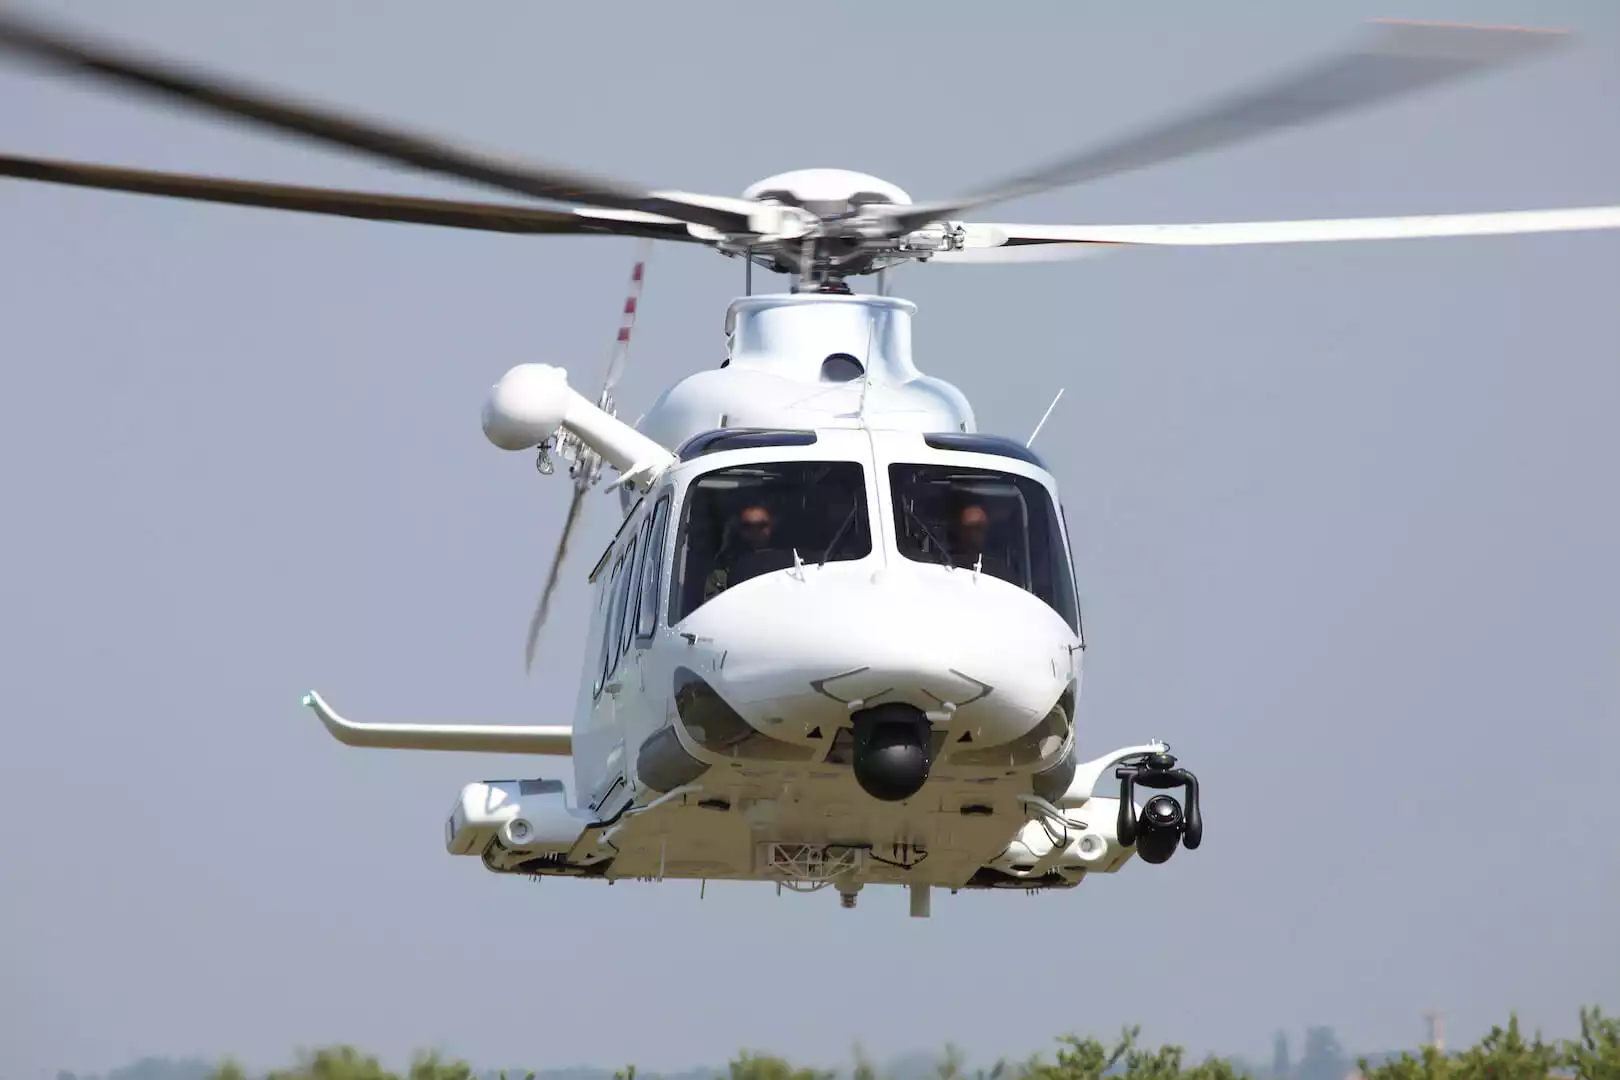 Hélicoptères : salve de contrats pour Leonardo